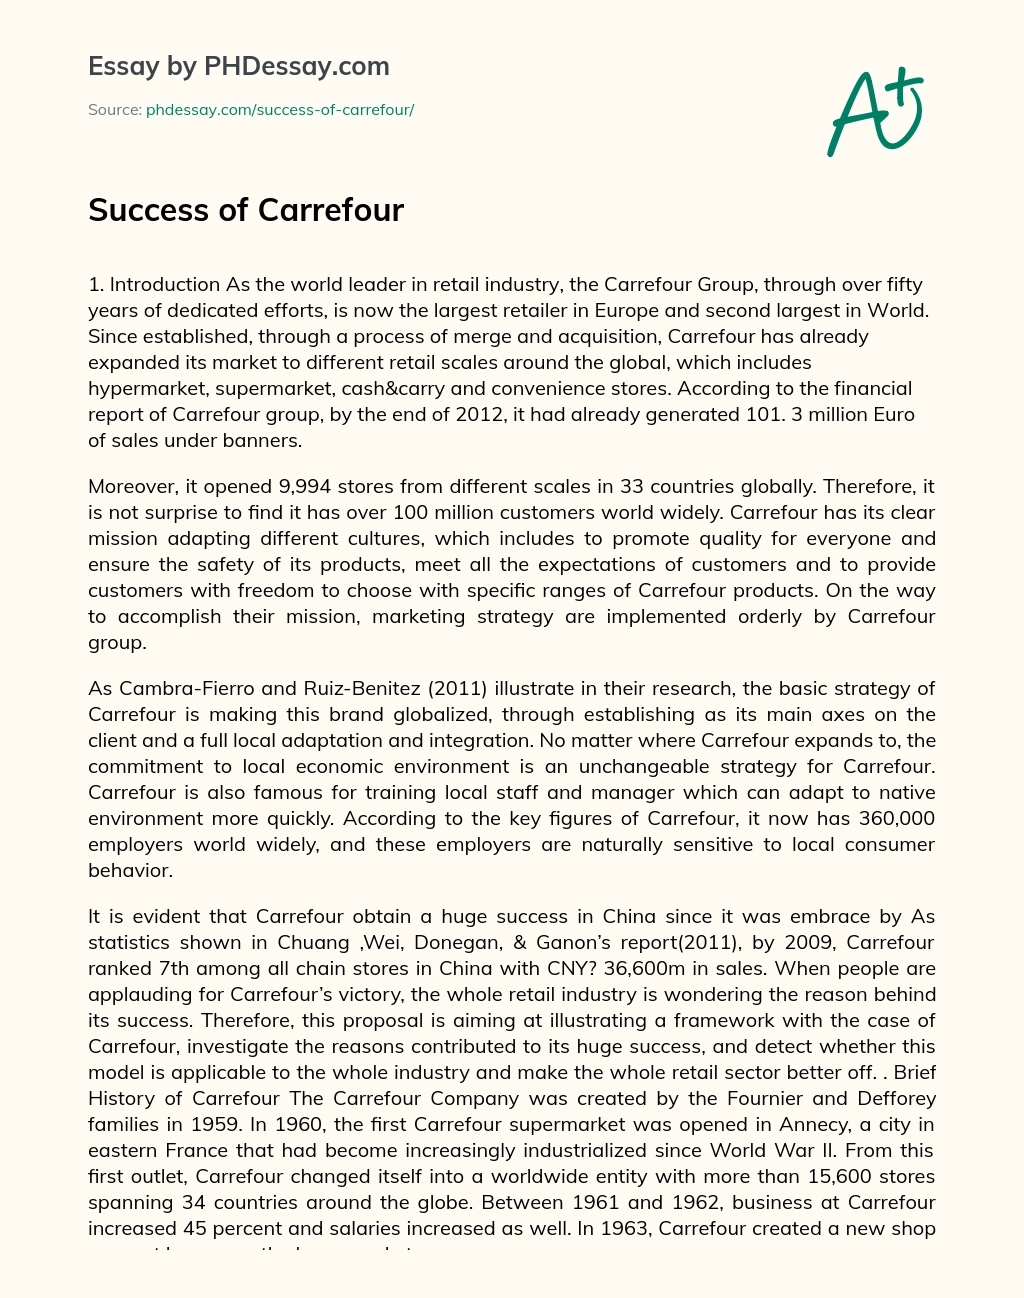 Success of Carrefour essay